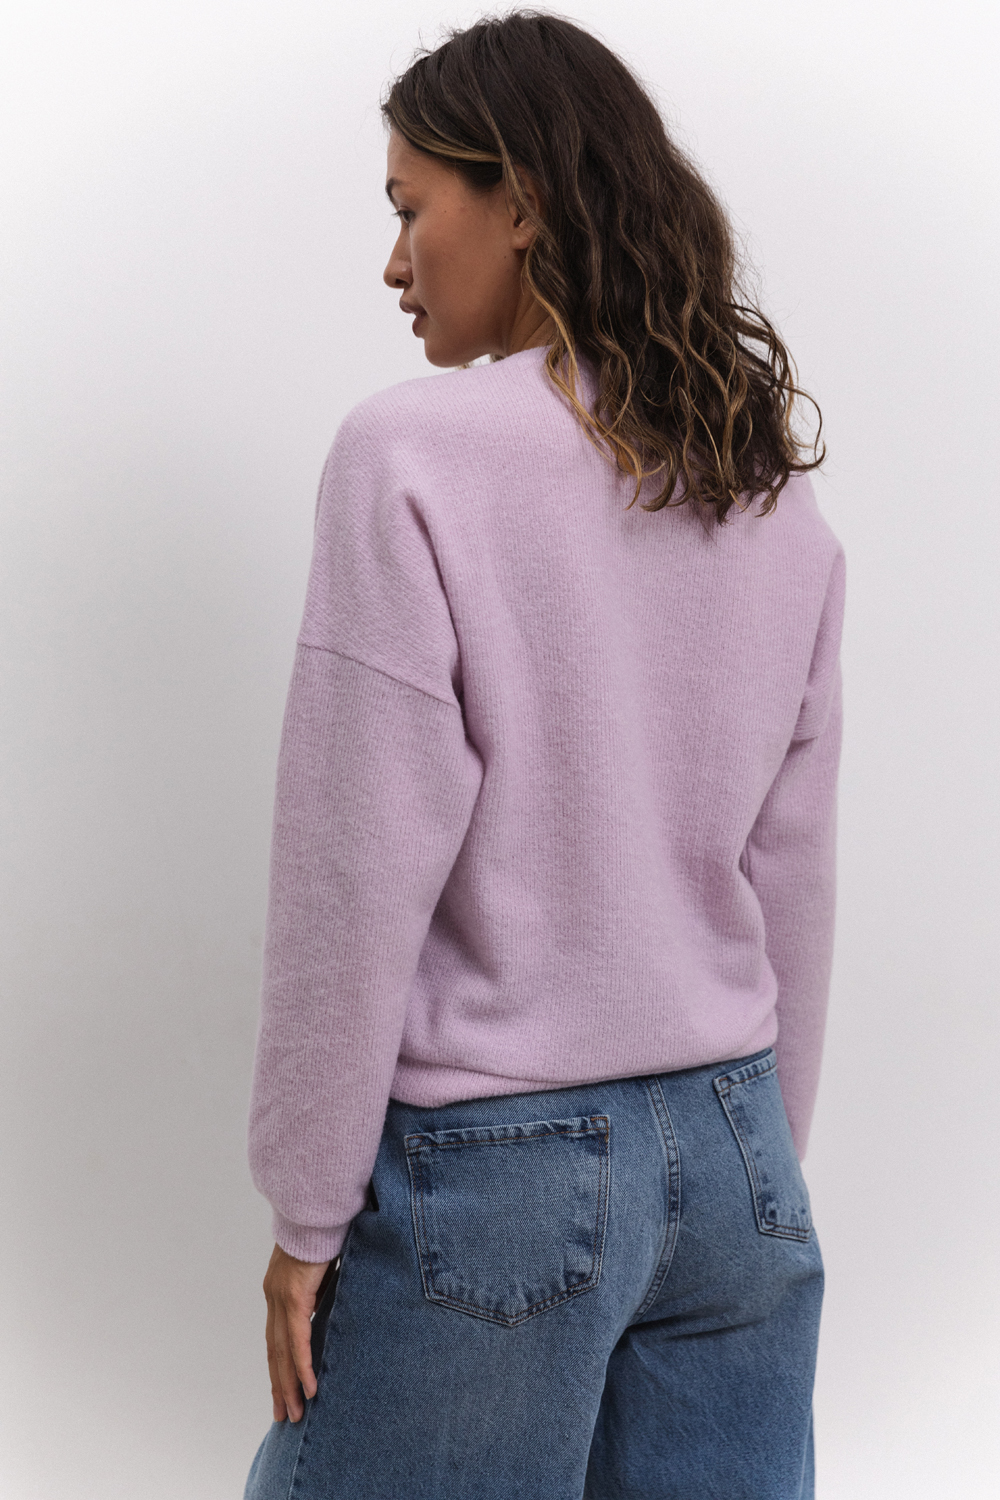 Lilac sweatshirt in soft angora jersey